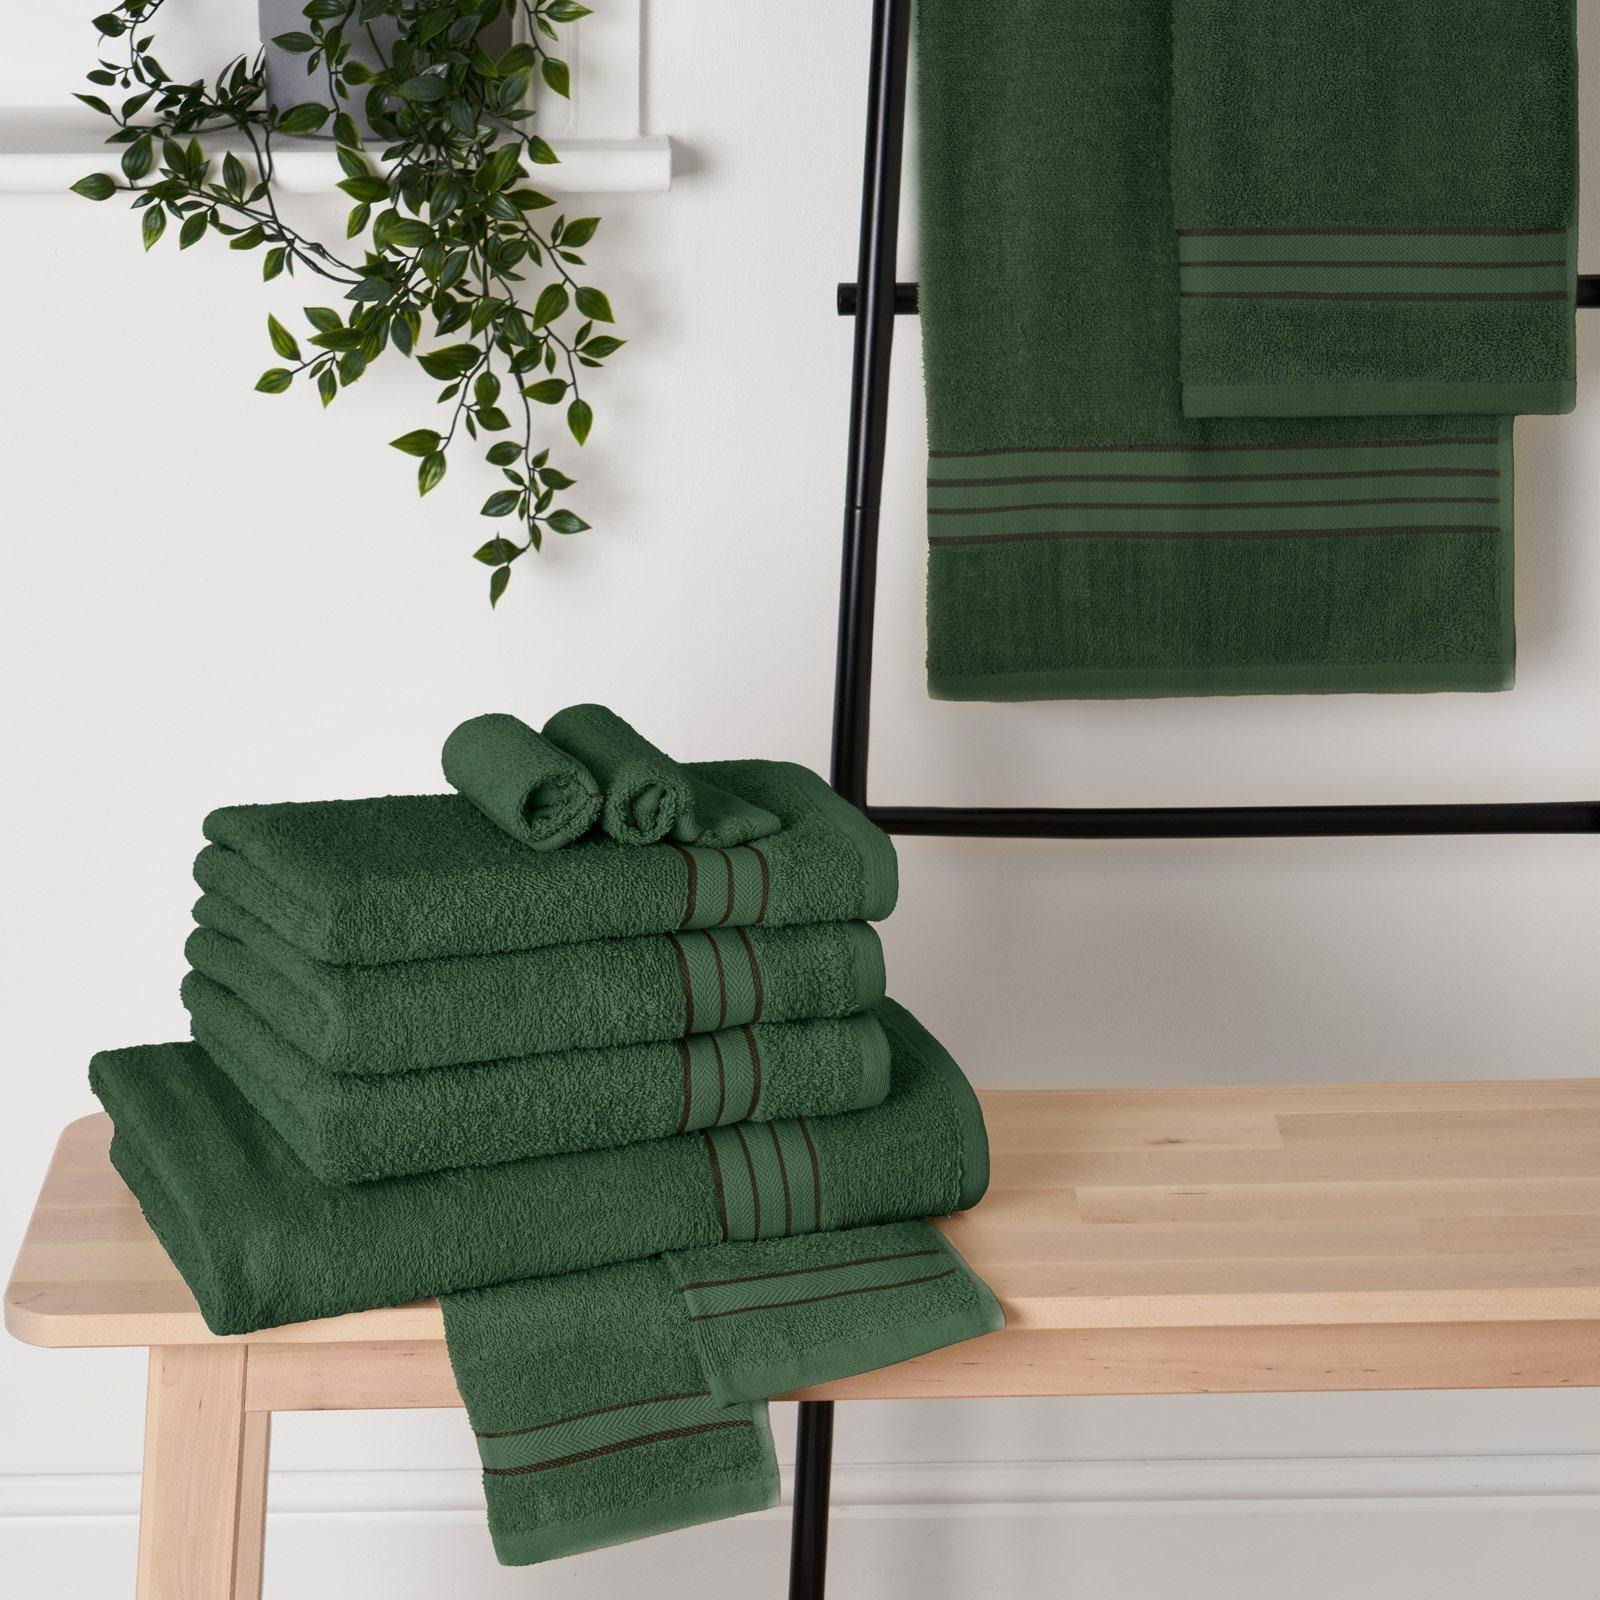 Luxury 100% Cotton Bath Sheet Bathroom Towel - image 1